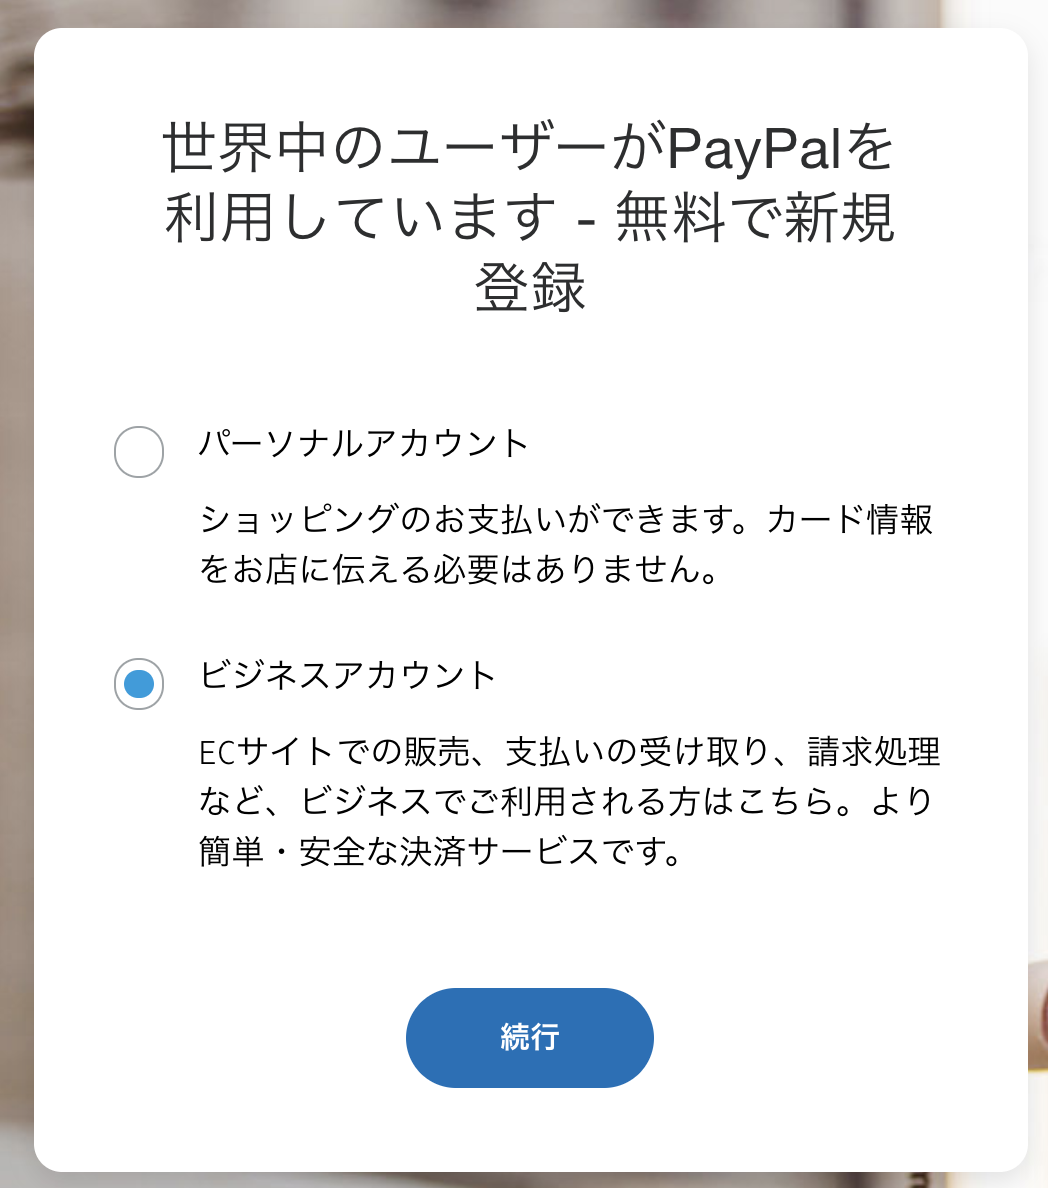 Paypal Paypalアカウント取得方法 ペライチヘルプ